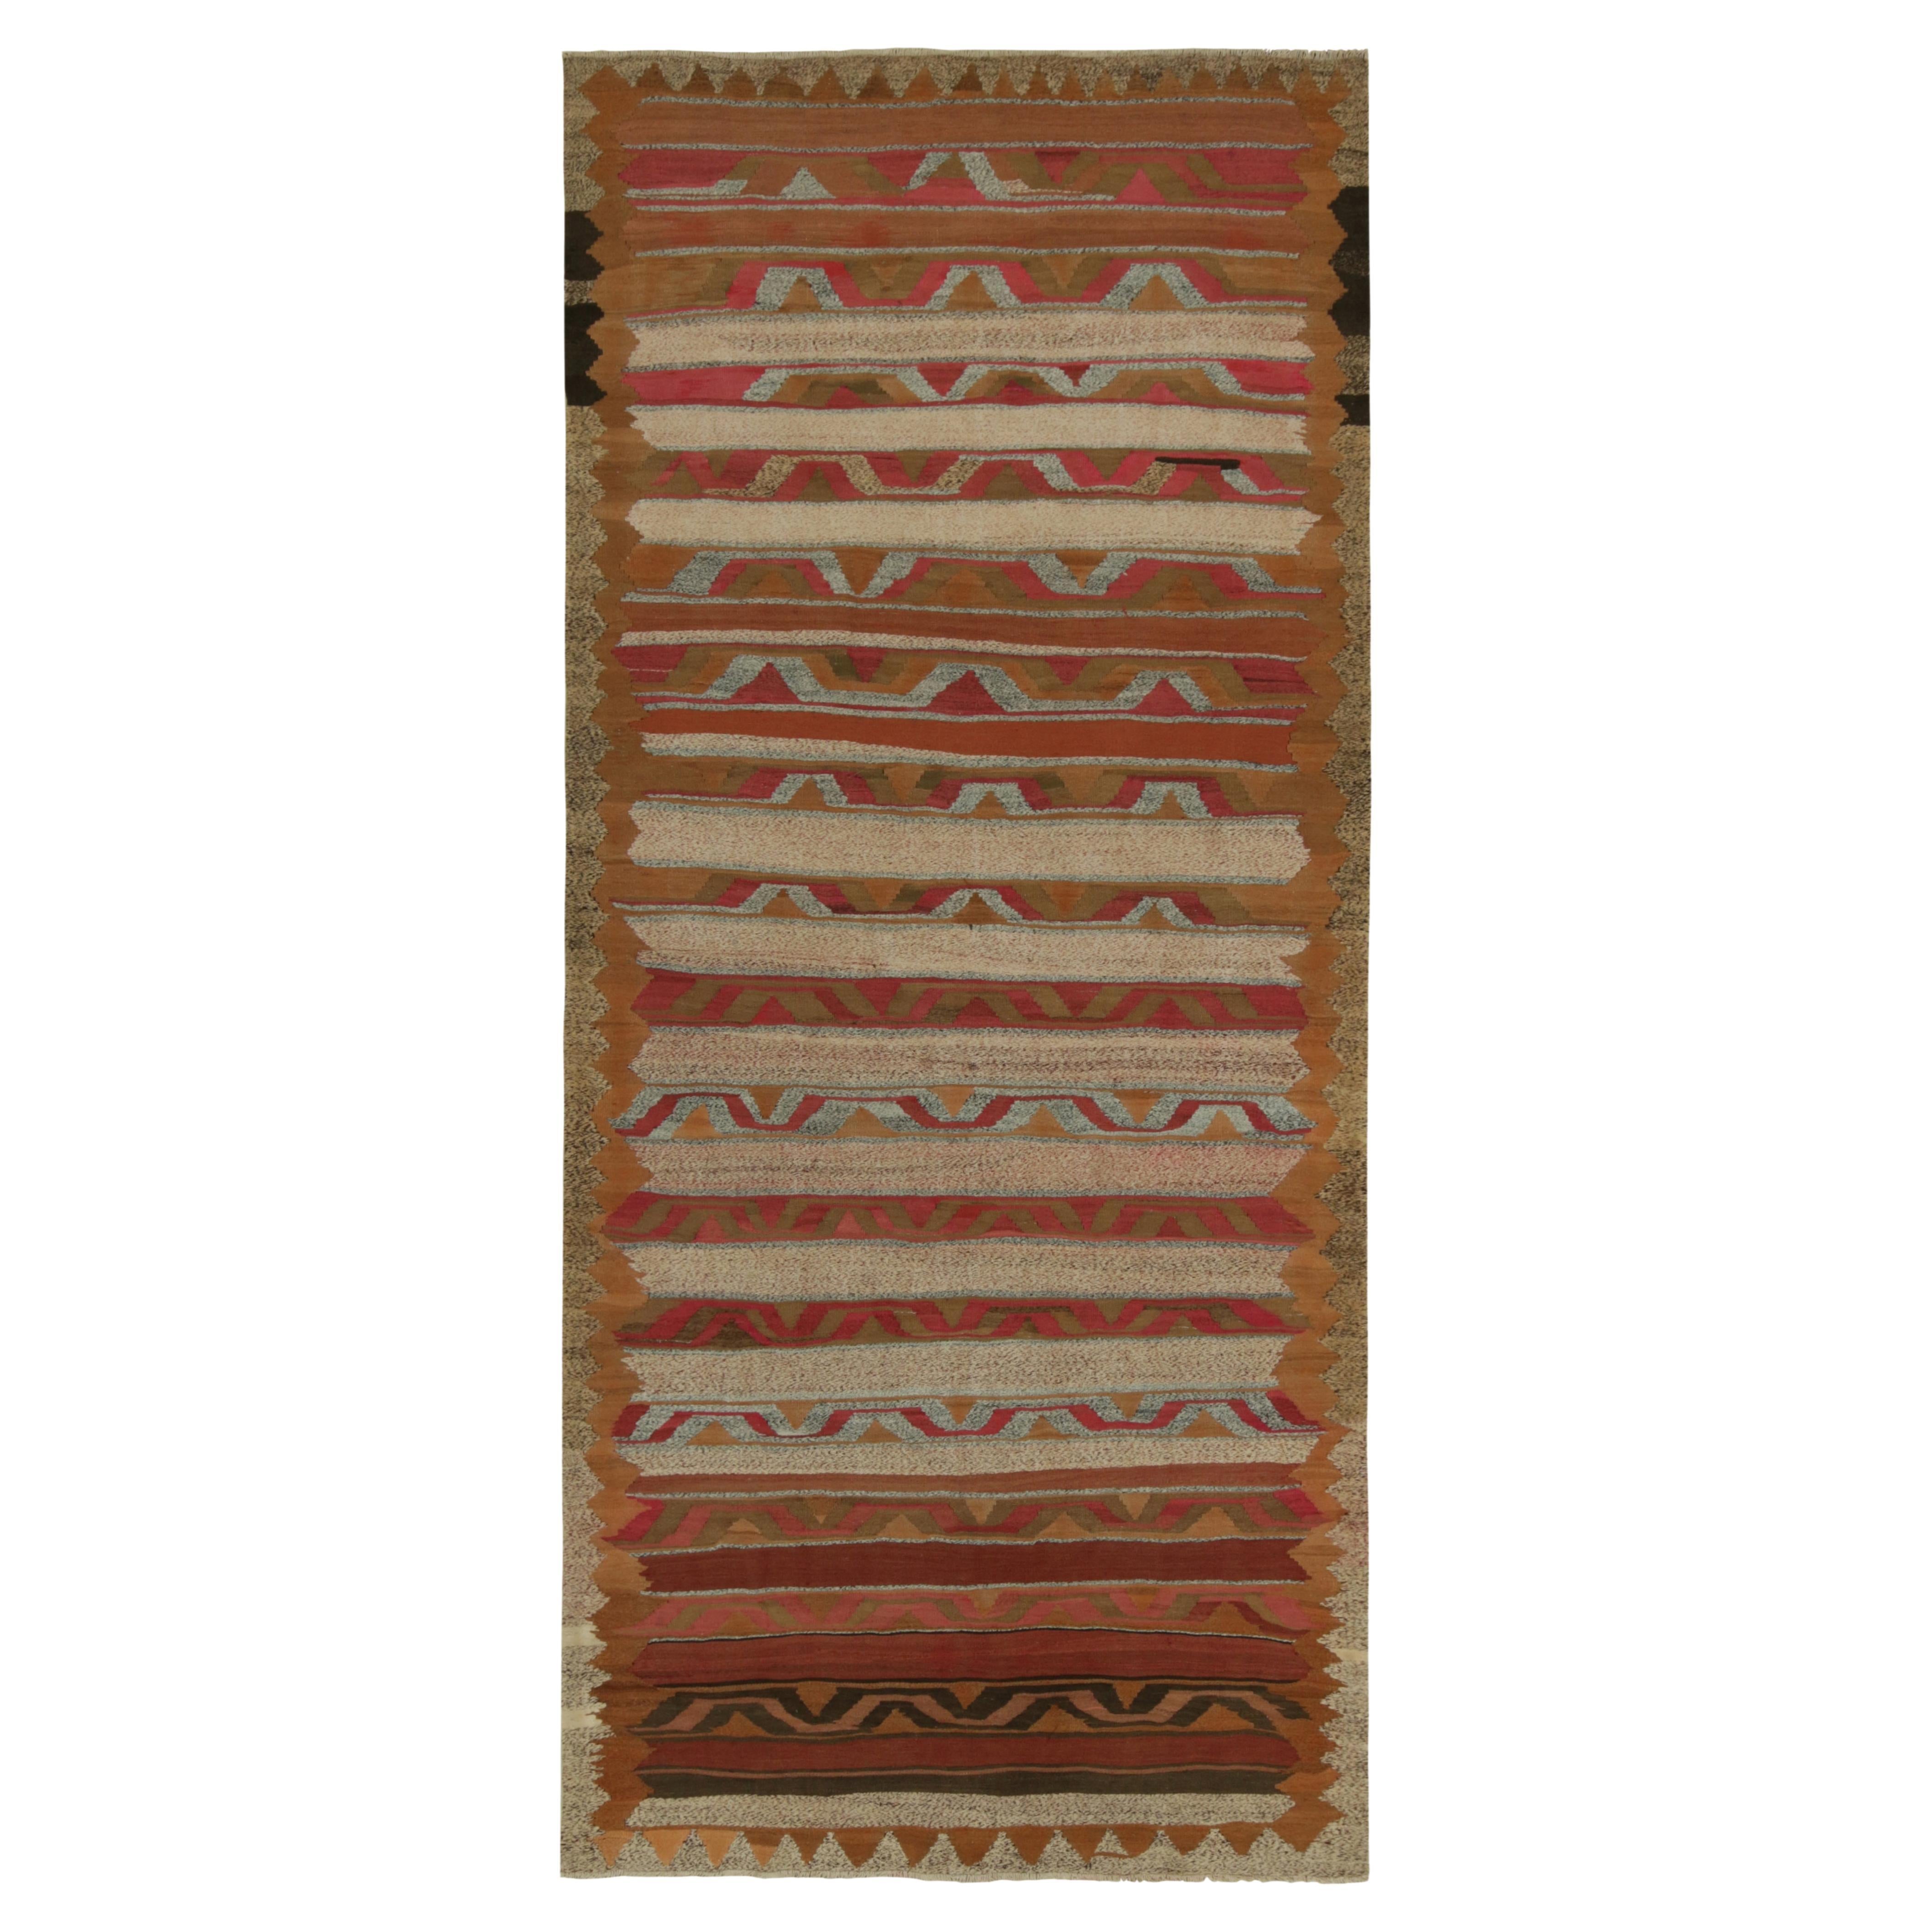 Vintage Persian Tribal Kilim Rug in Polychromatic Stripes by Rug & Kilim